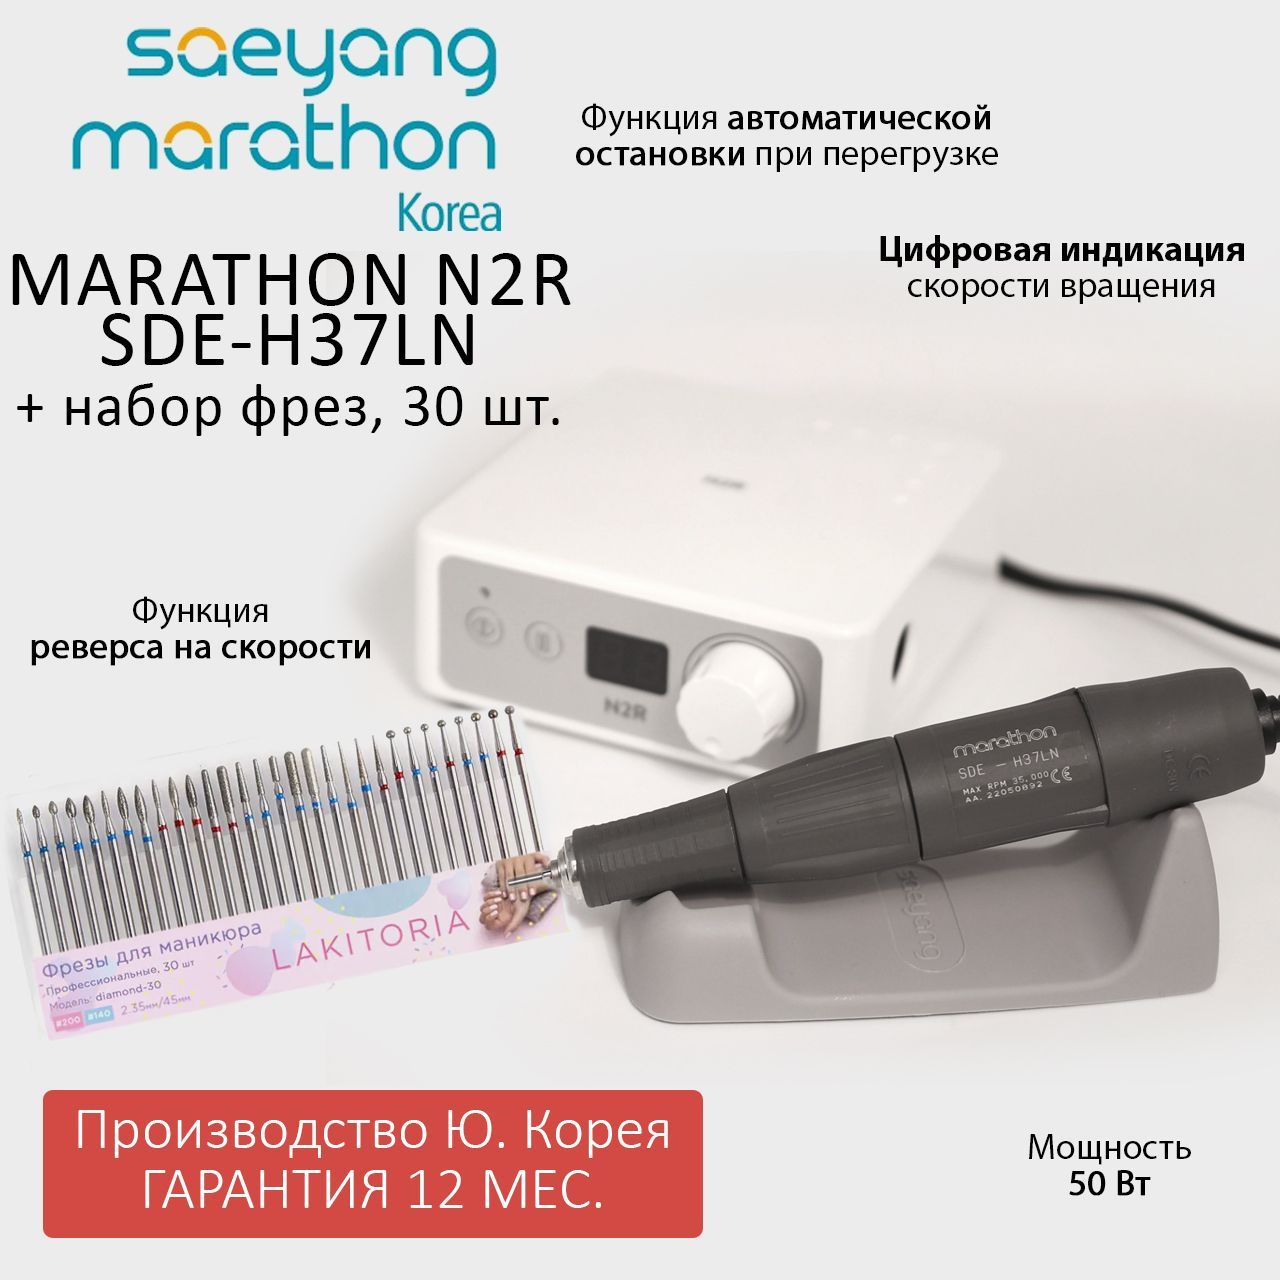 Аппарат для маникюра Marathon N2R SDE-H37LN без педали и набор фрез для маникюра 30шт цифровая экономика предприятия учебник